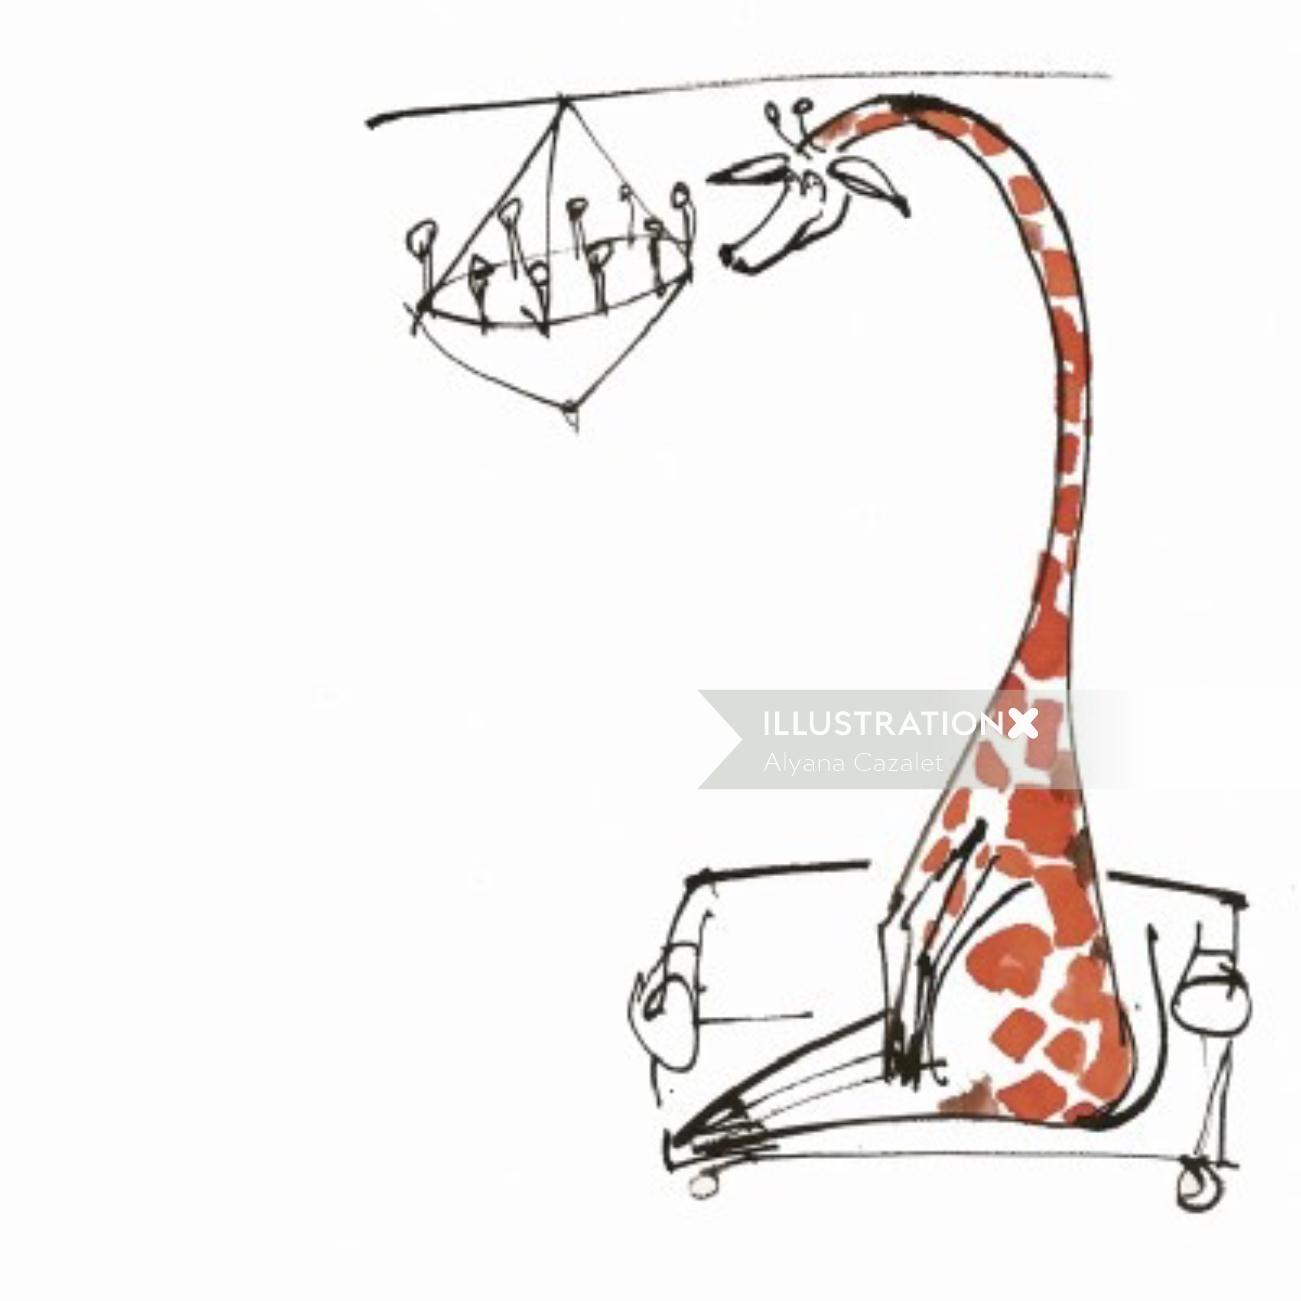 Illustration de girafe comique par Alyana Cazalet